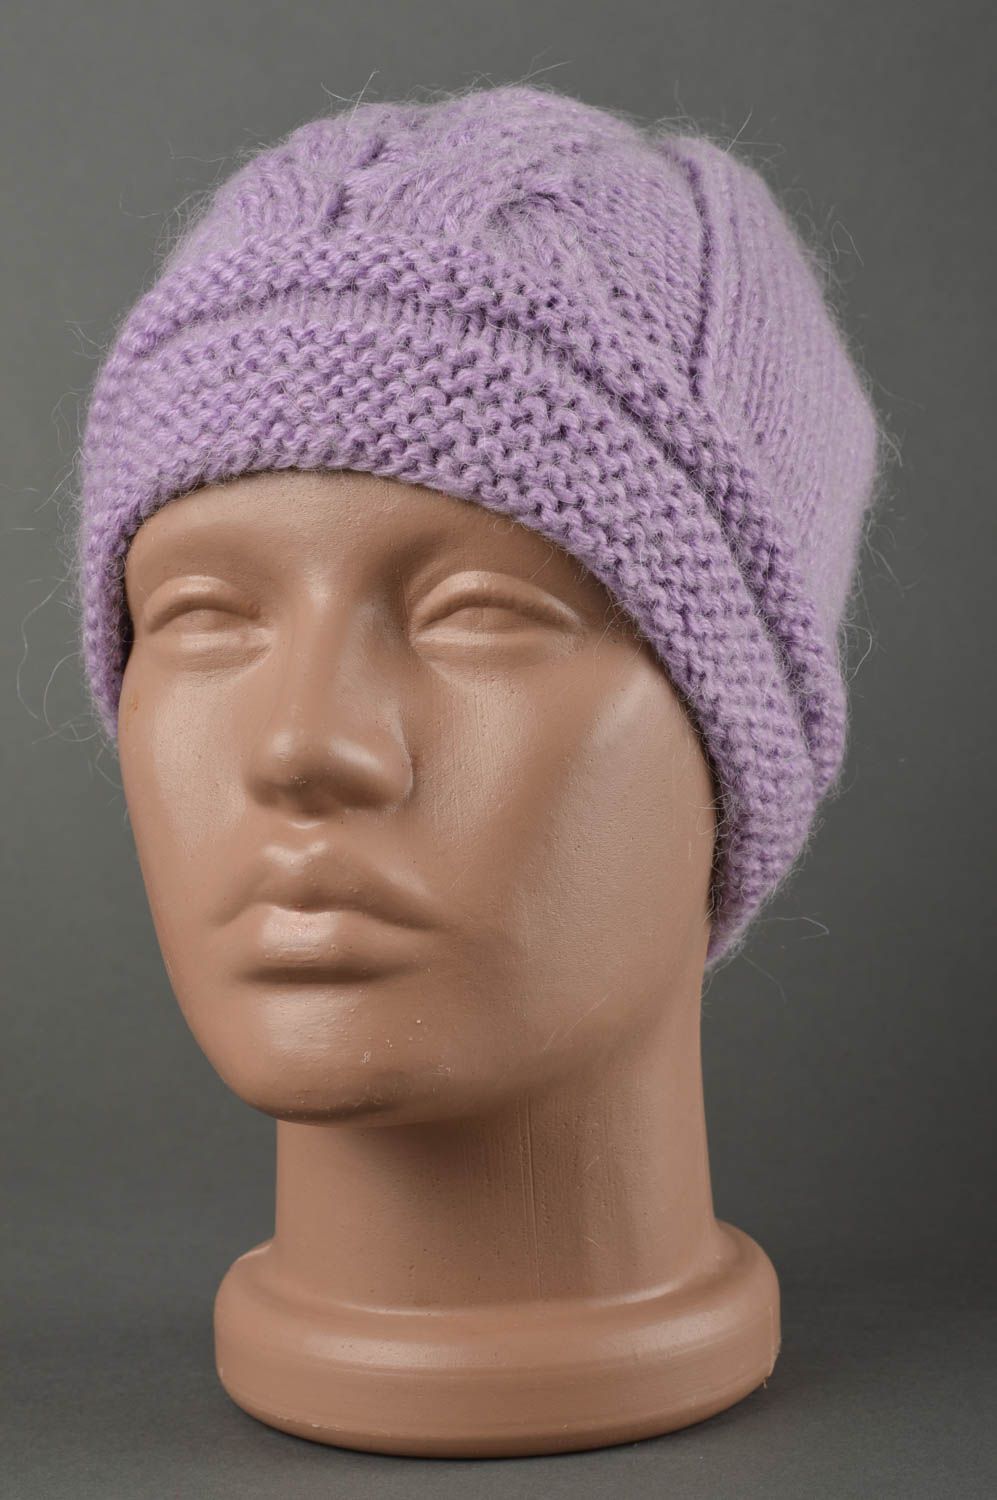 Kids winter hat accessories for girls handmade kids clothing crochet baby hat photo 1